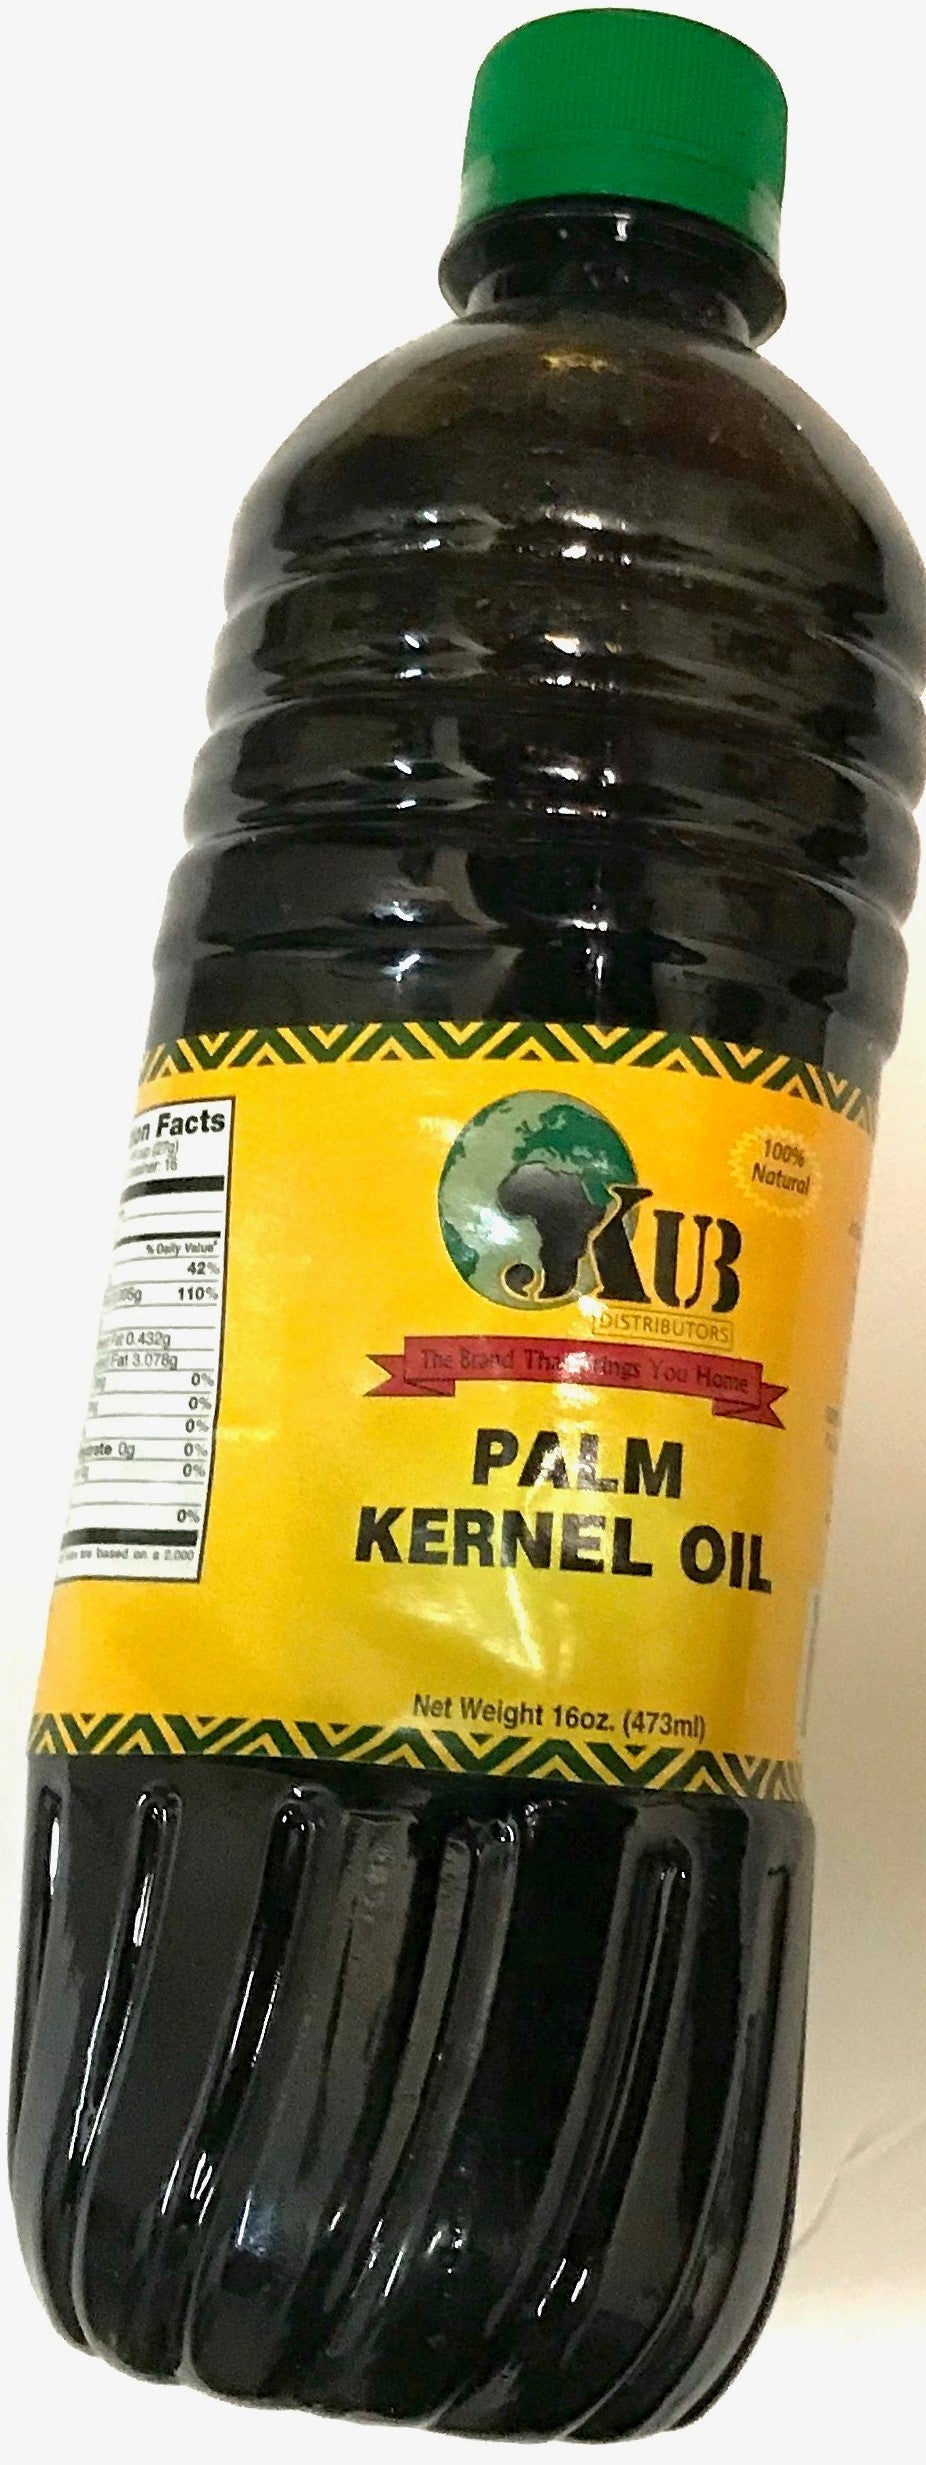 Jkub Palm Kernel Oil, 16oz